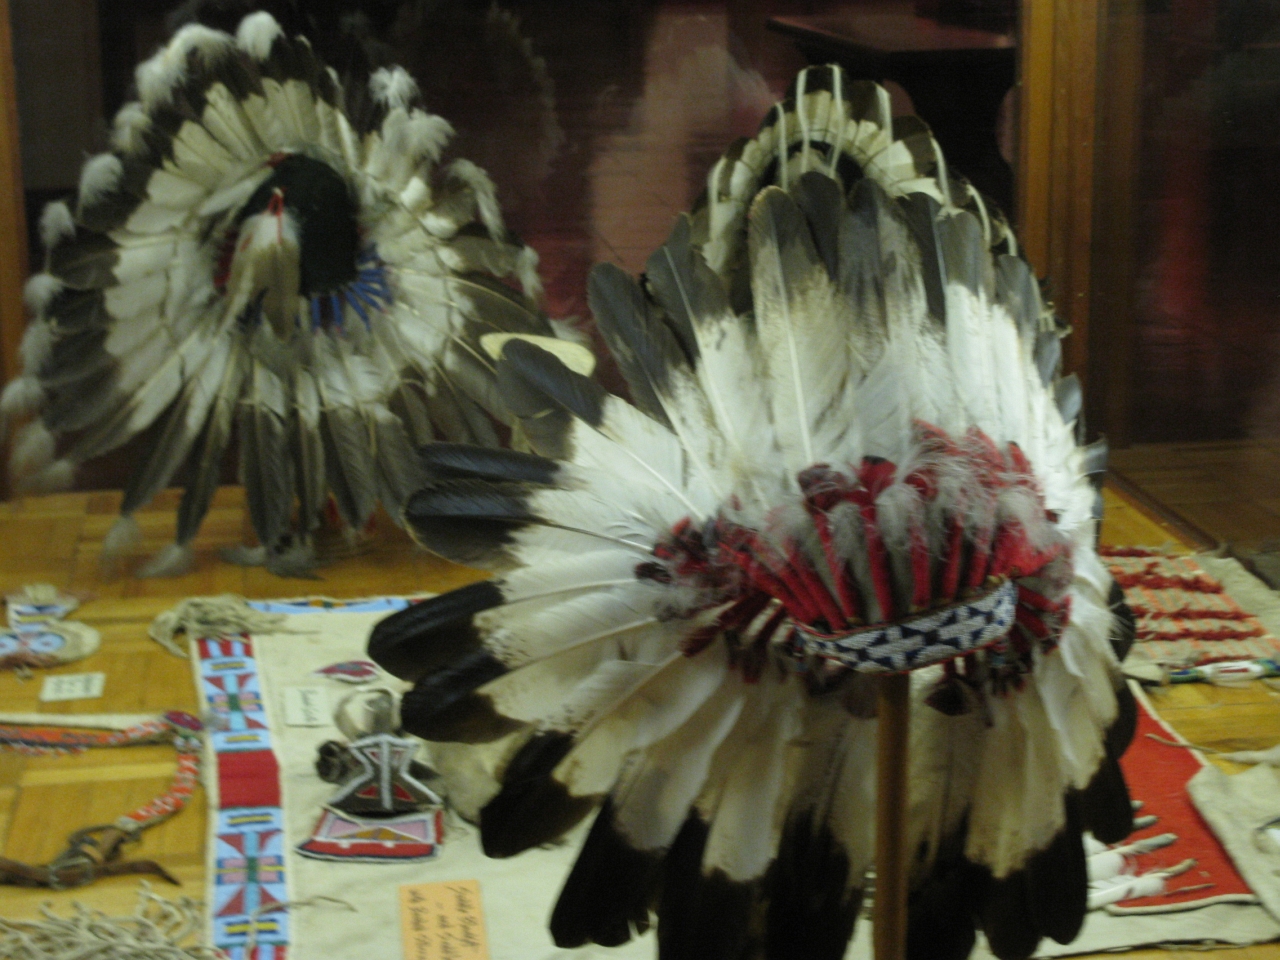 Native headgear at Woolaroc.